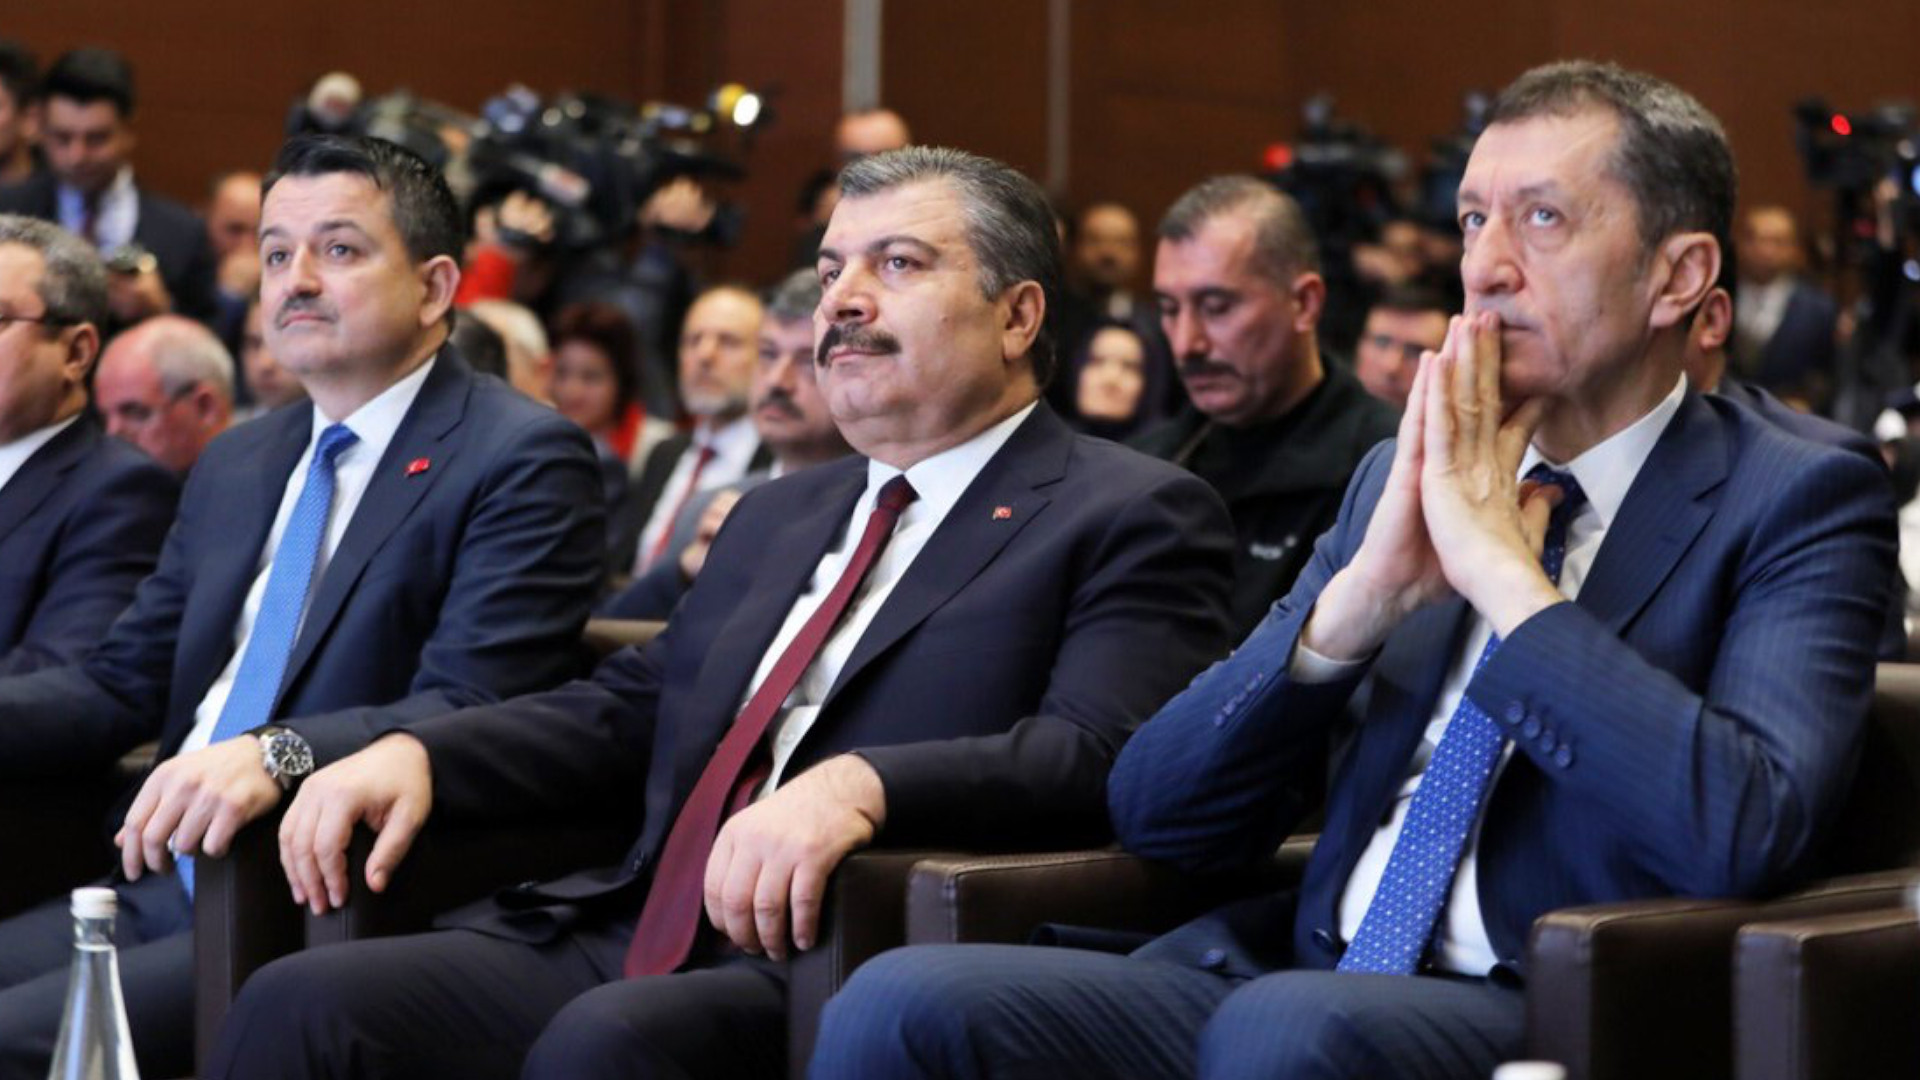 Erdoğan getting ready for cabinet reshuffle in autumn